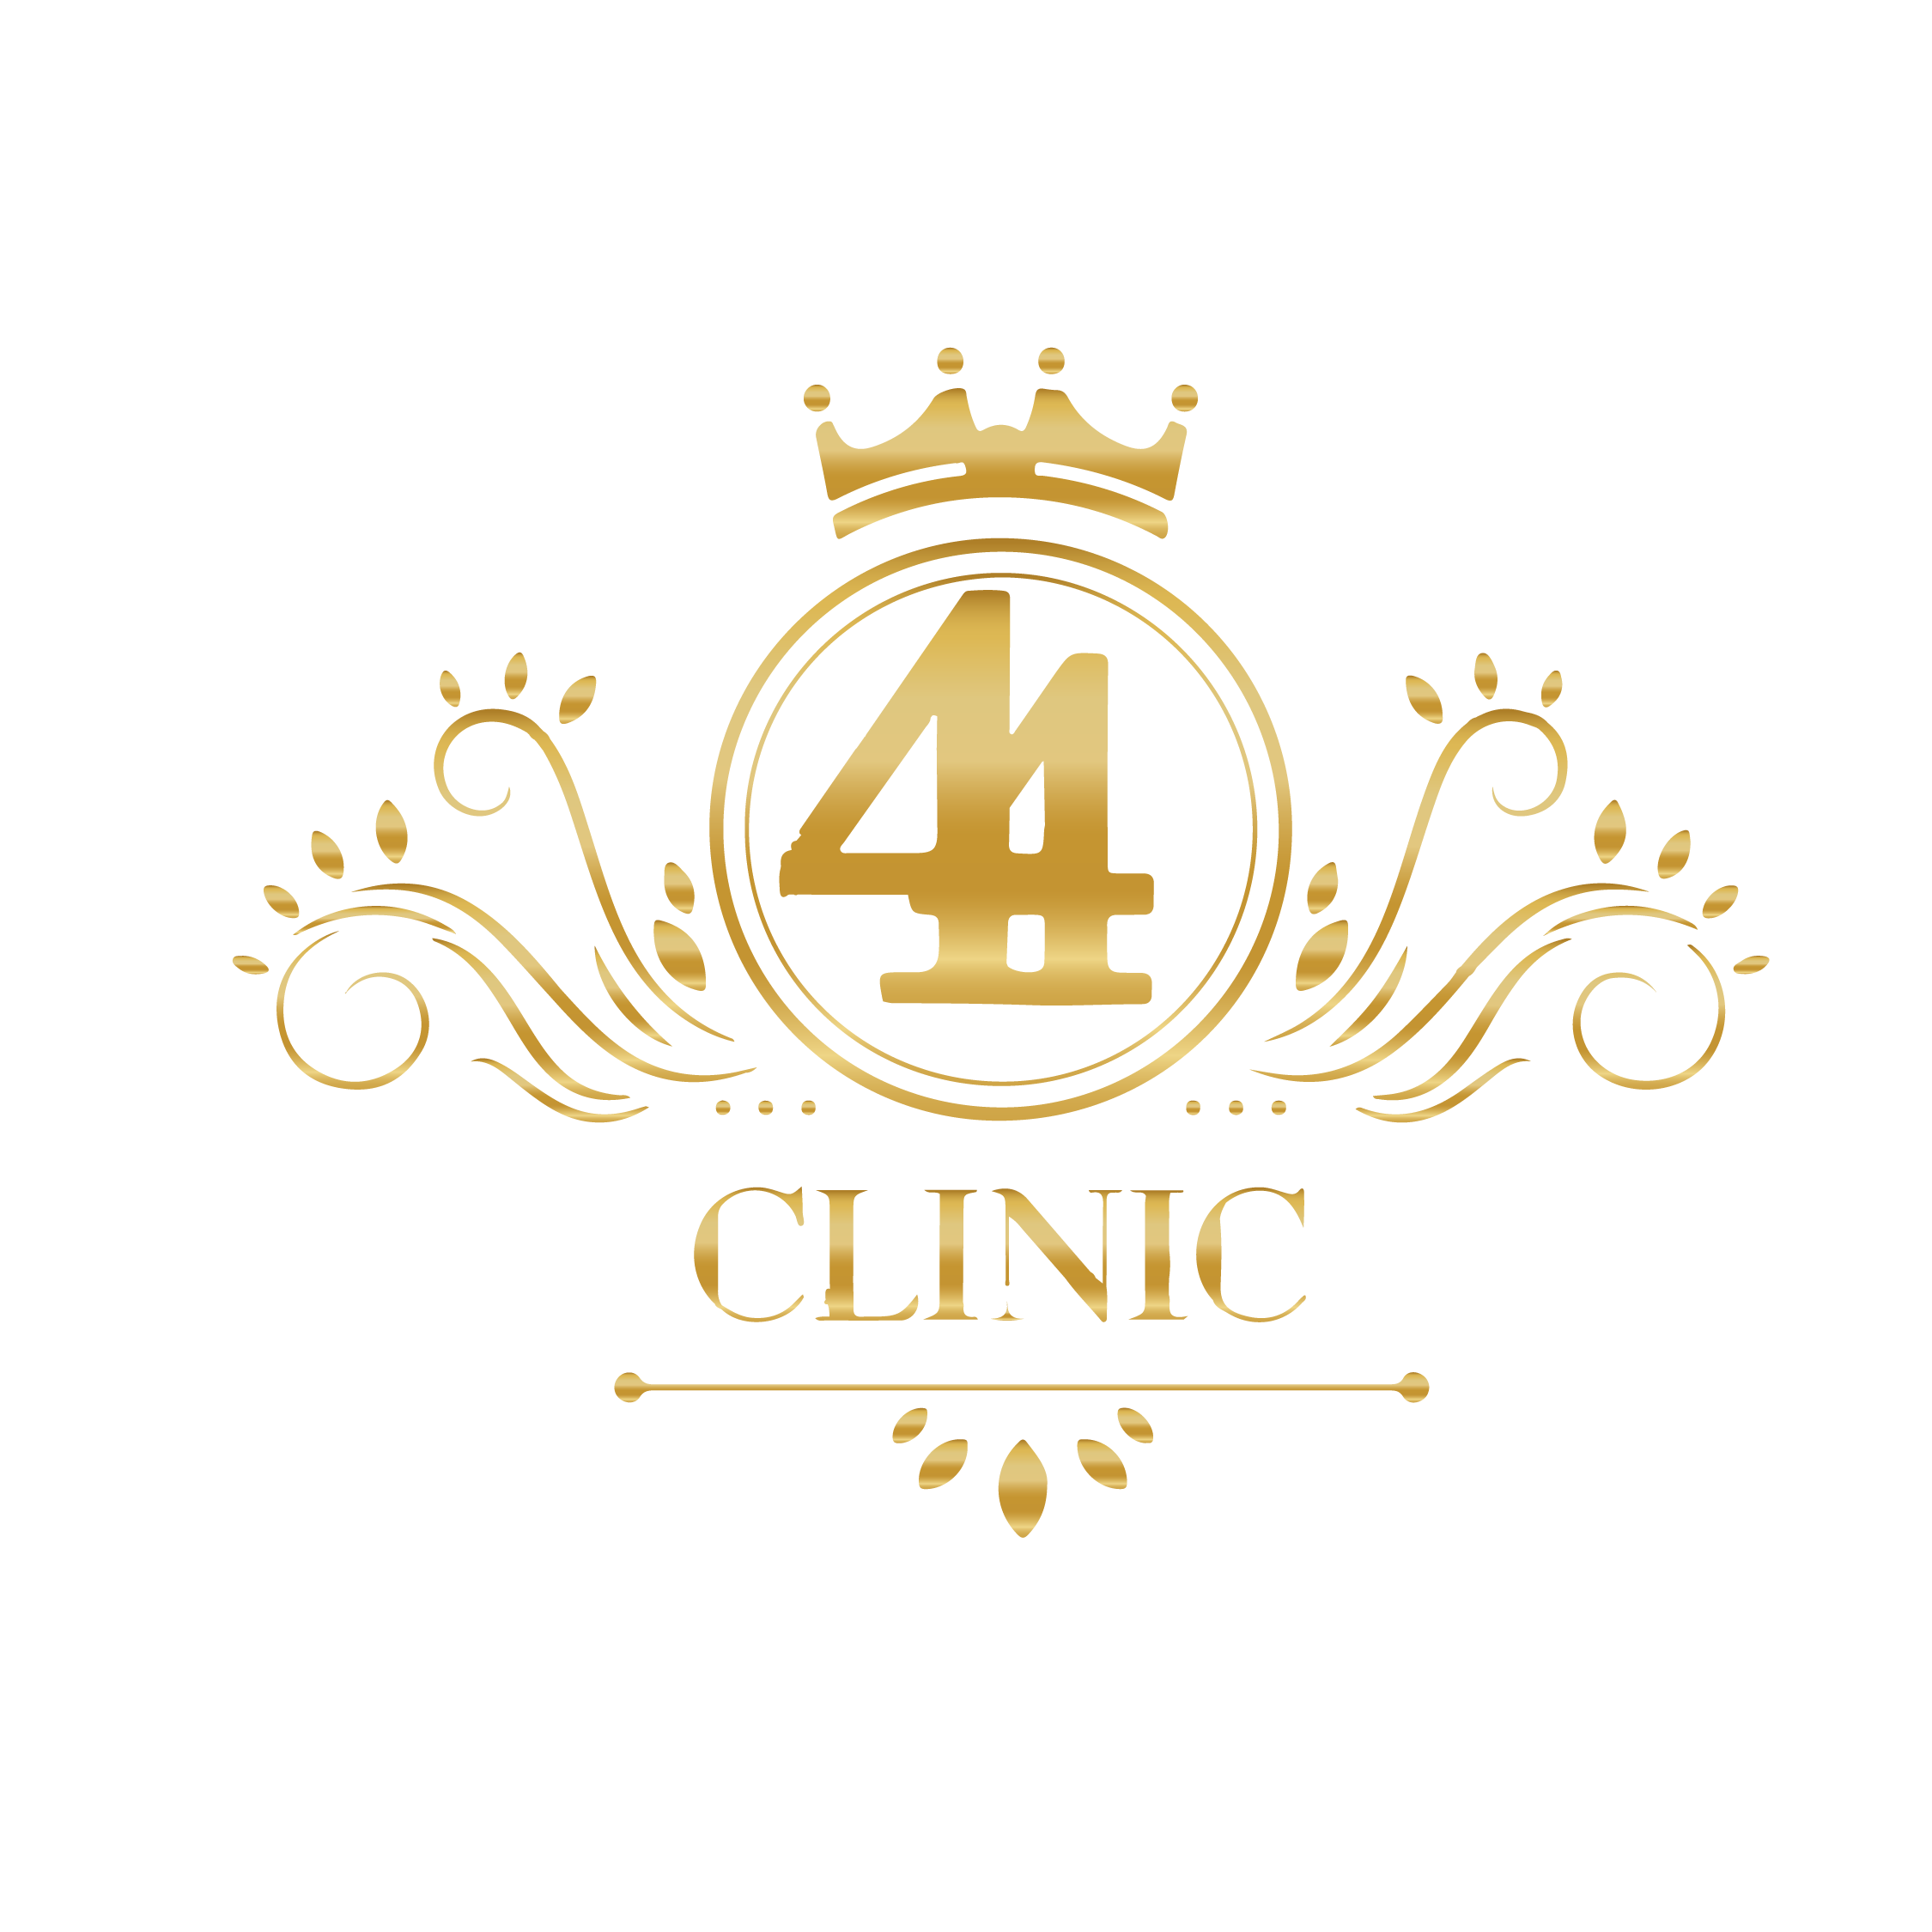 44Clinic